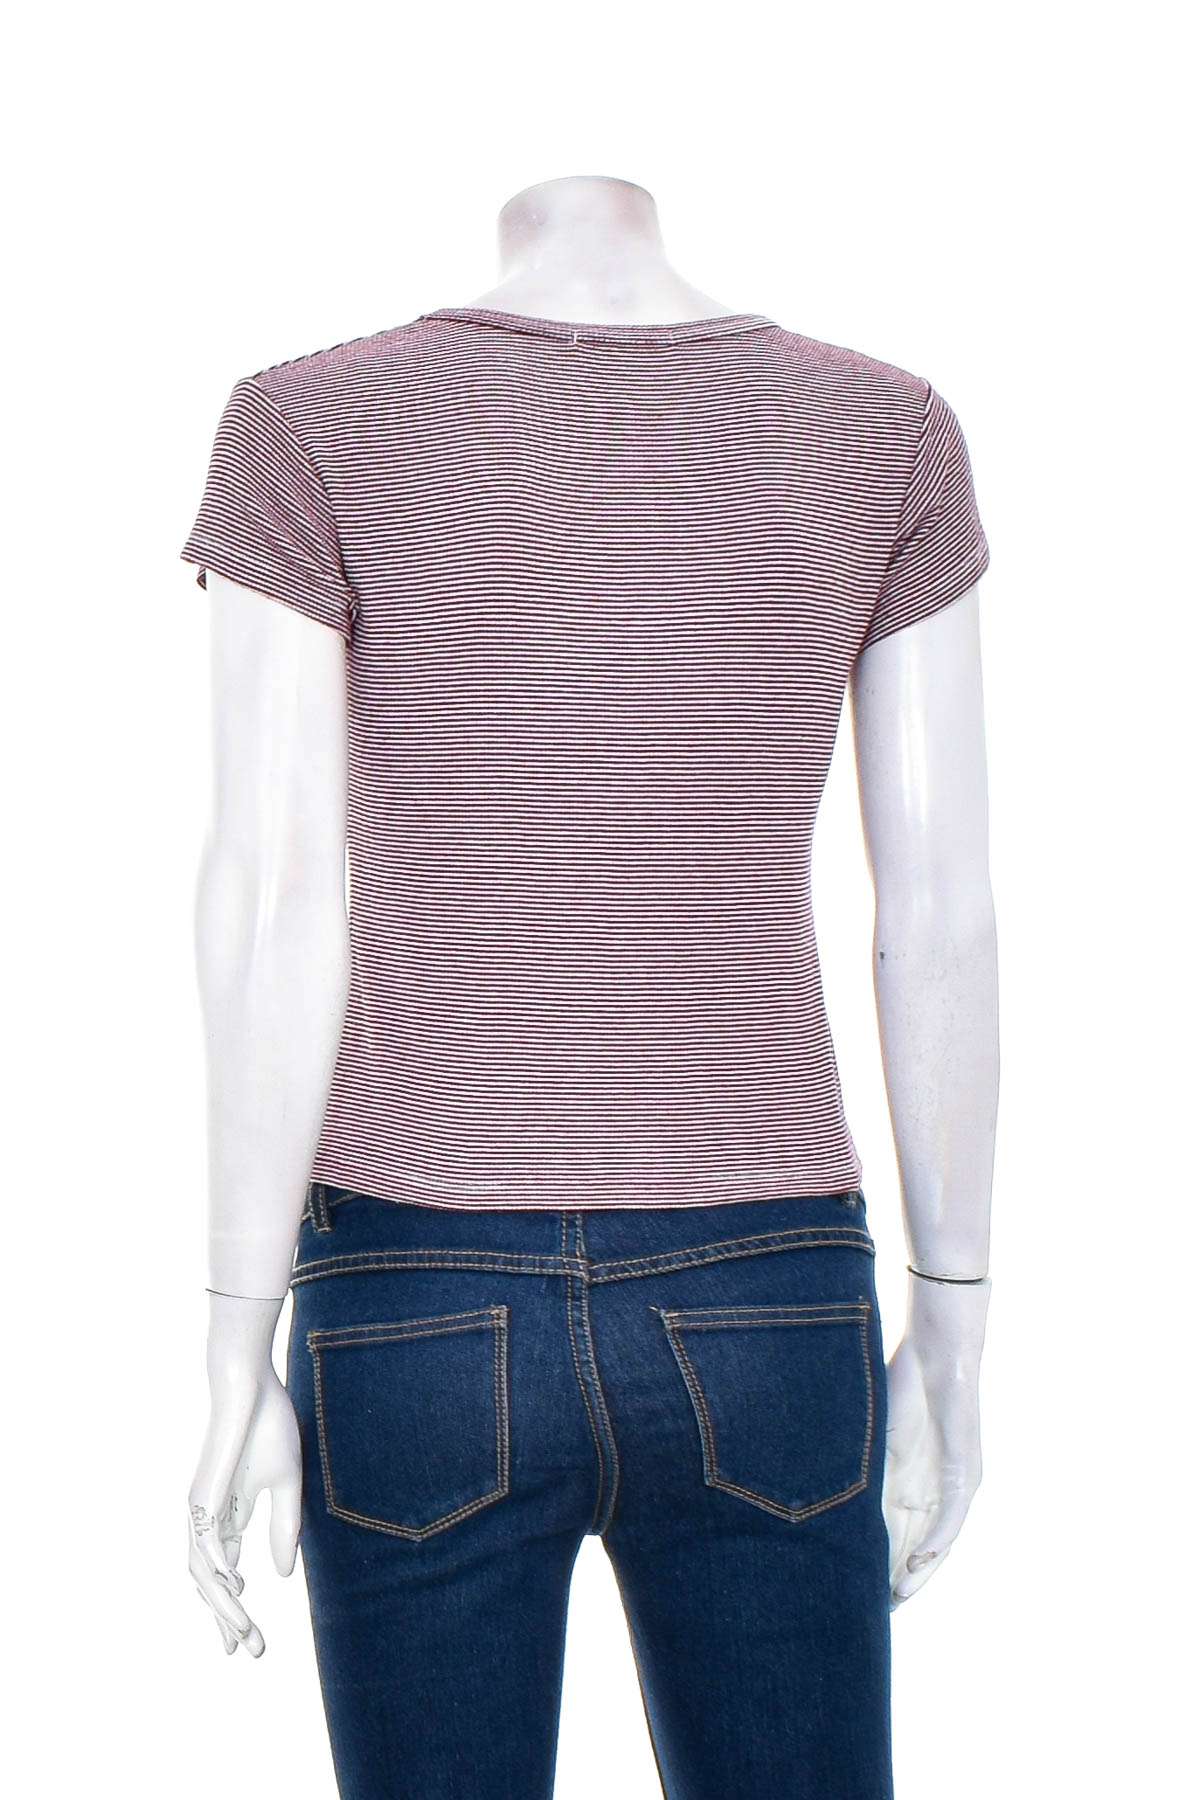 Women's sweater - BRANDY MELVILLE - 1